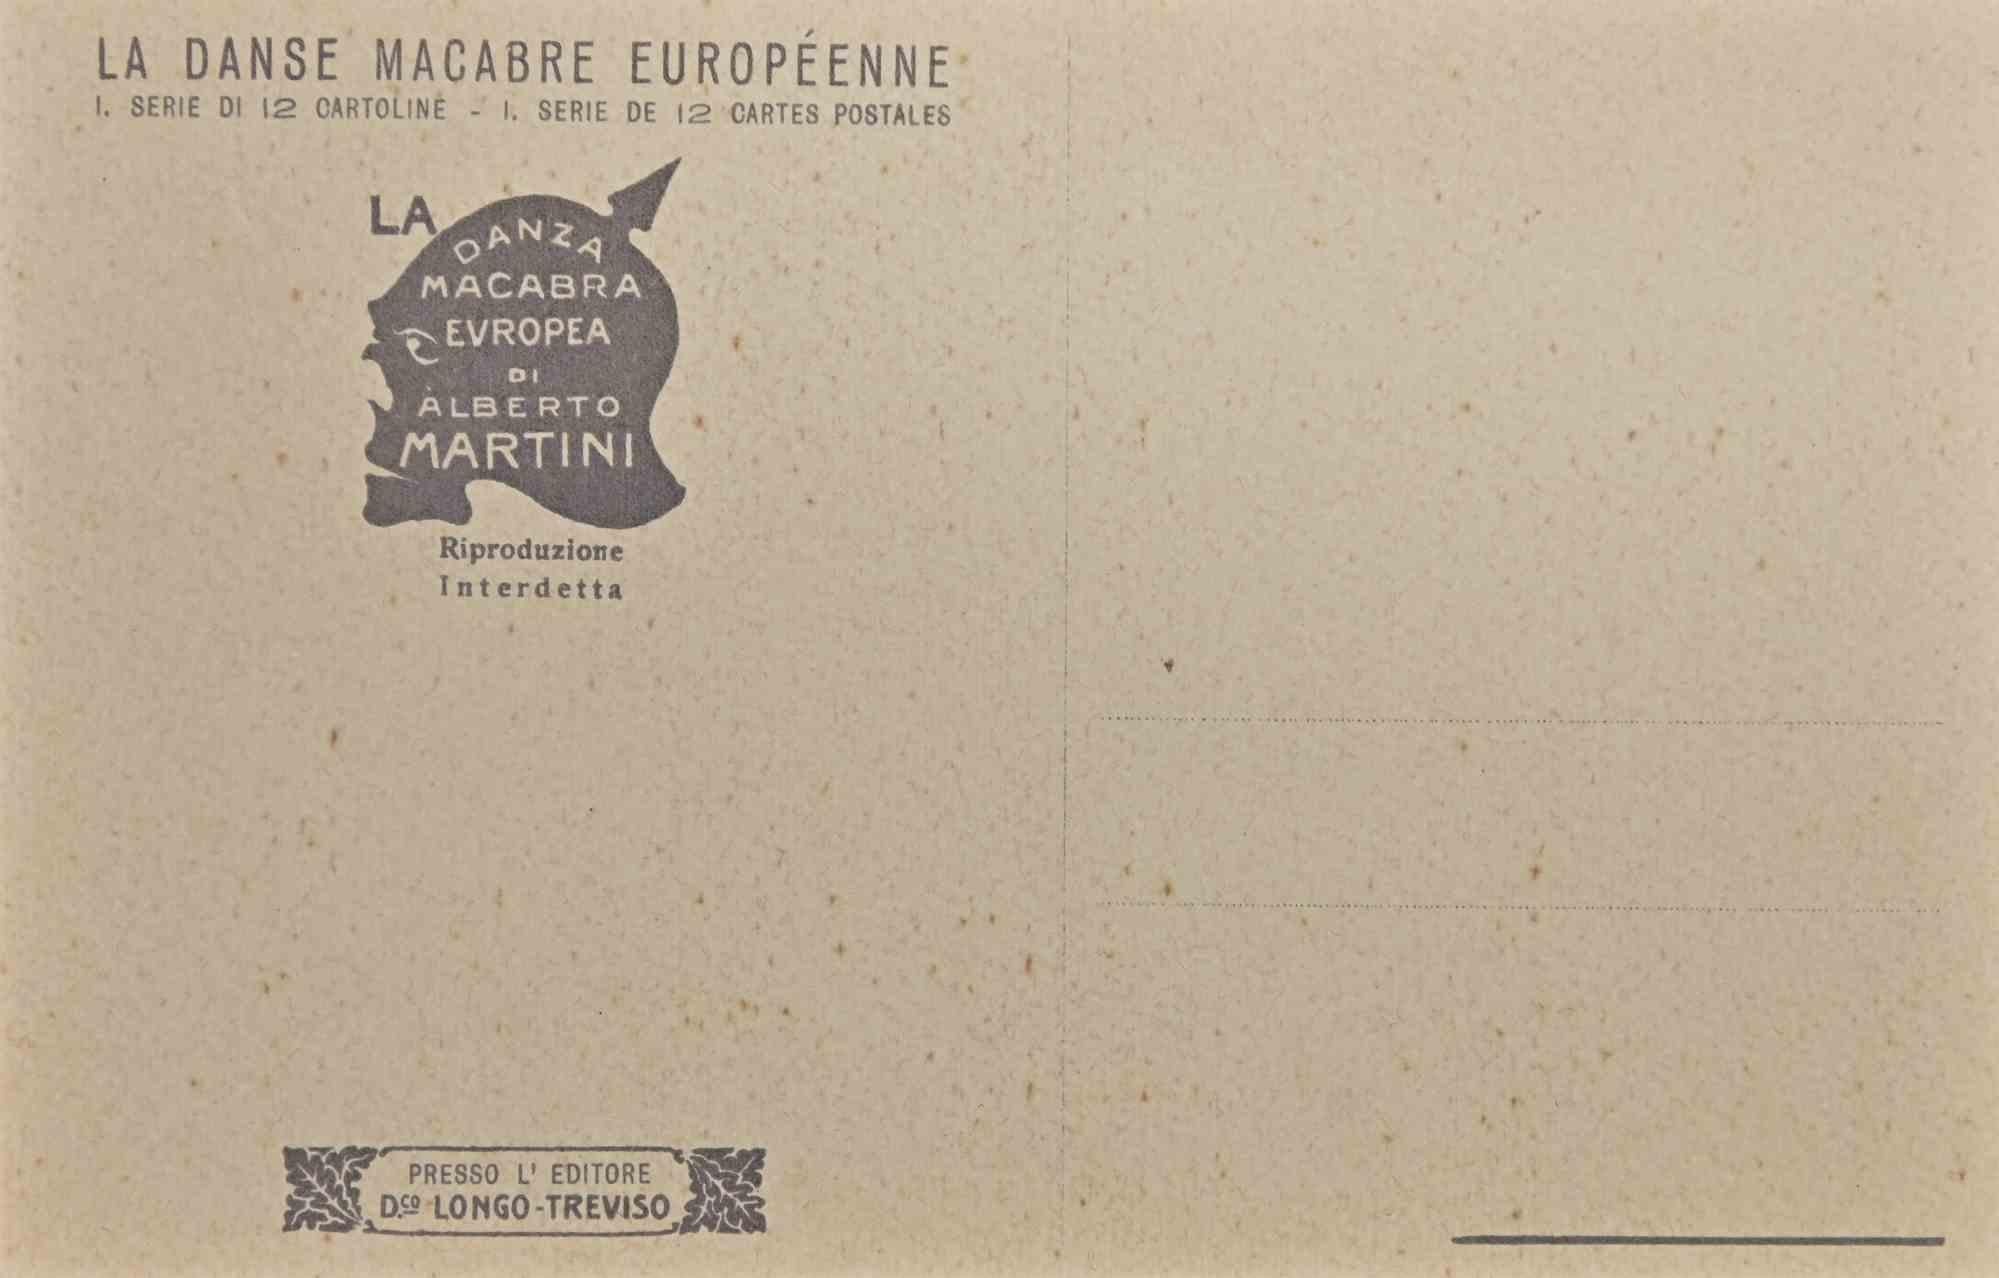 The European Macabre Dance N.1  - Lithograph by A. Martini - 1915 - Print by Alberto Martini